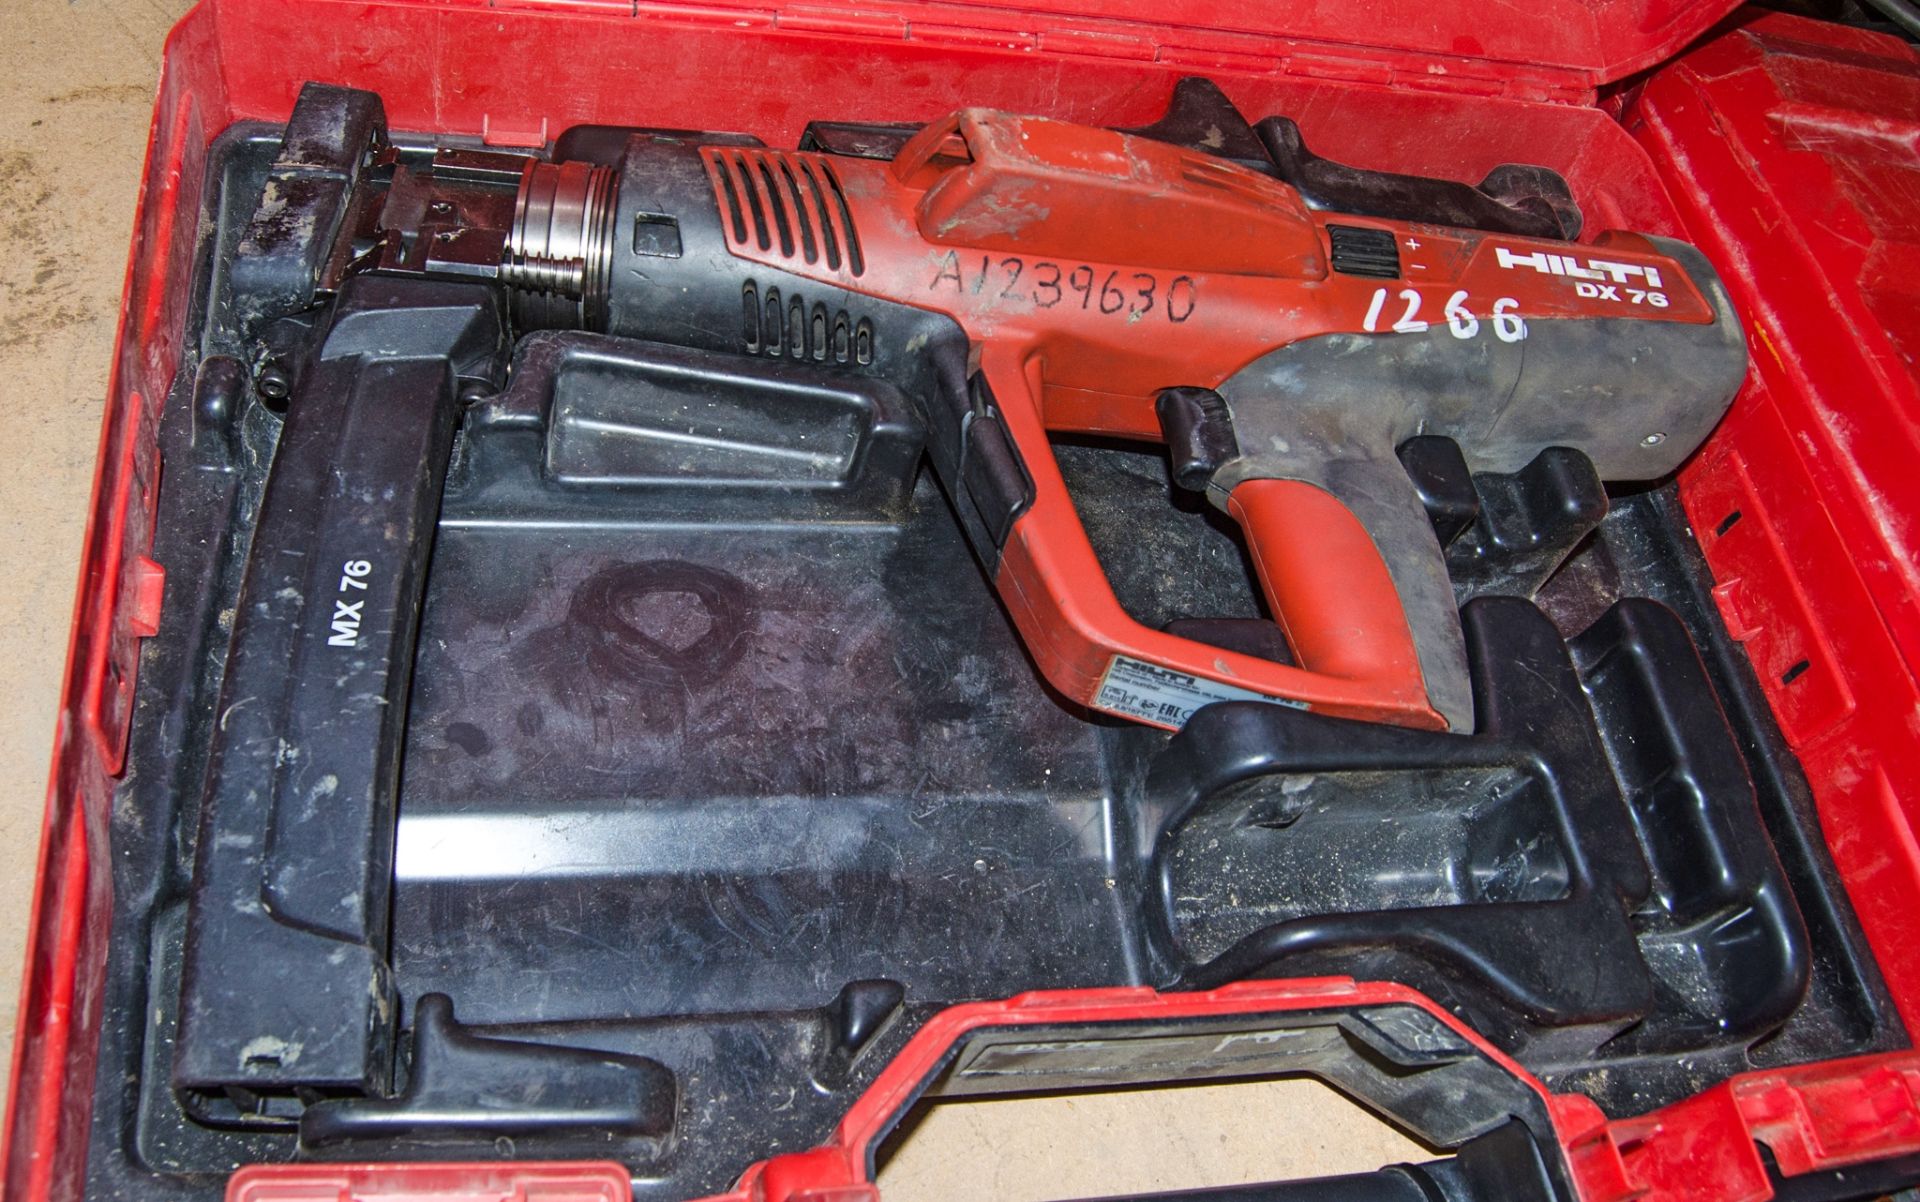 Hilti DX76 nail gun c/w carry case A1239630